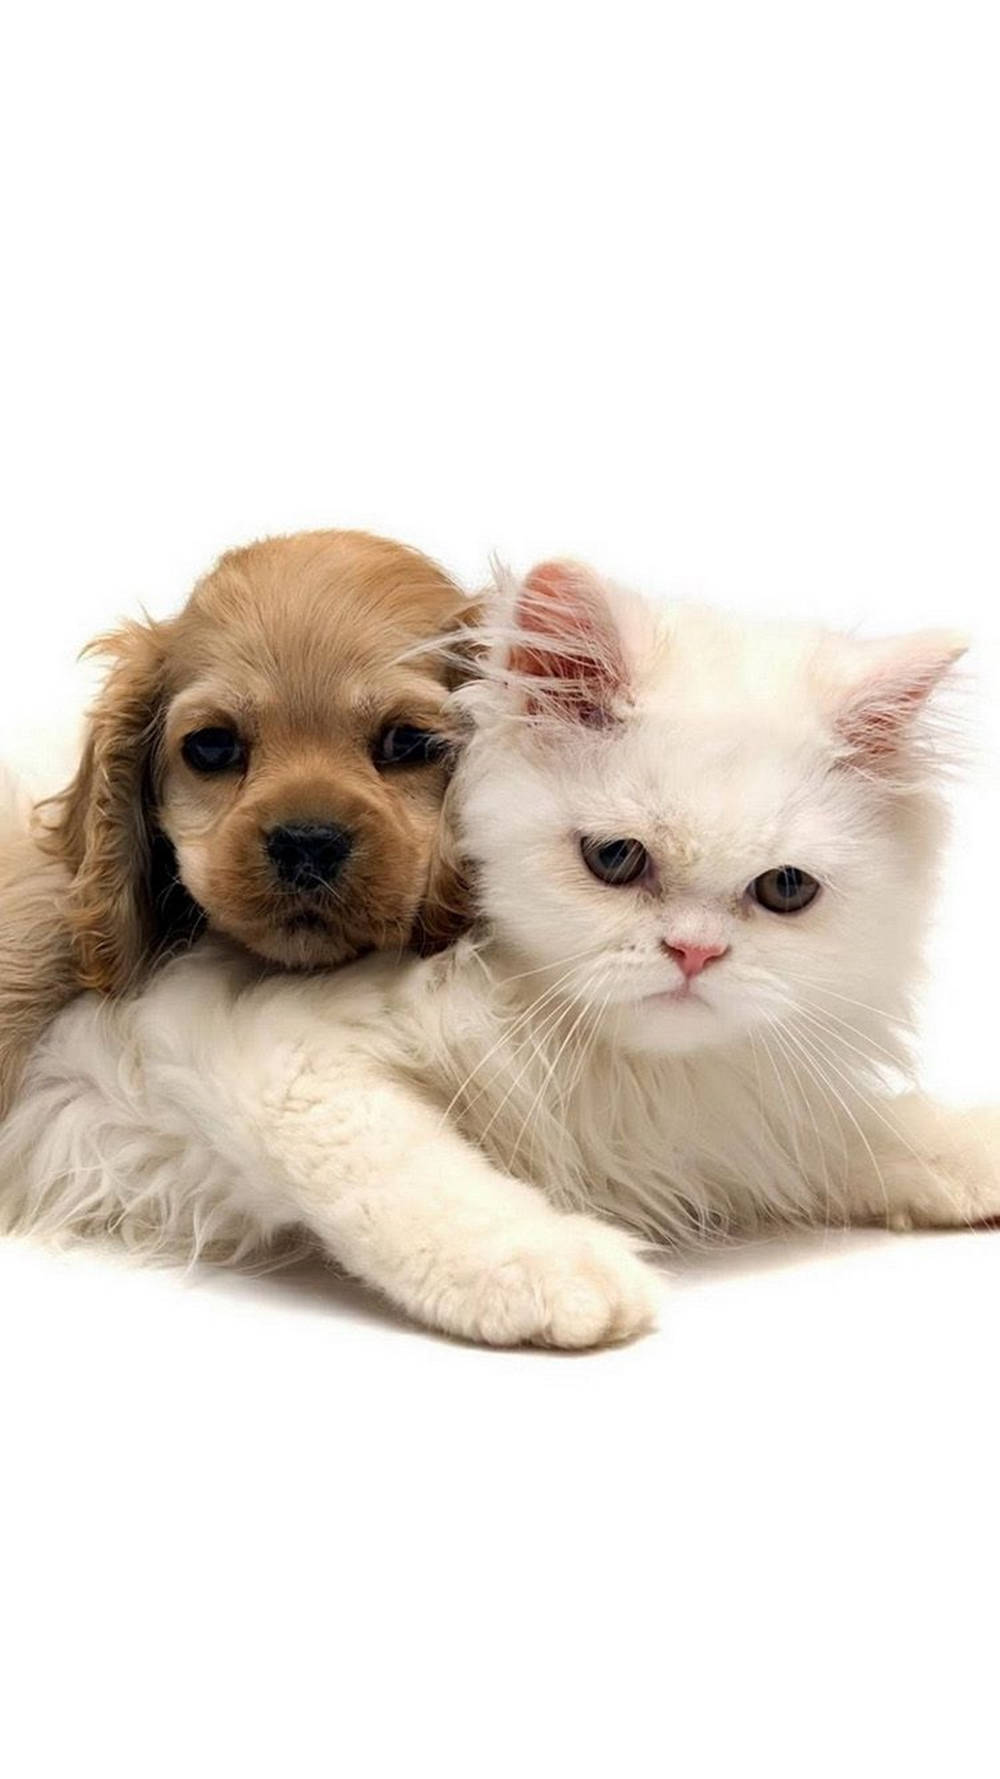 Sweet Spaniel Dog And Persian Cat Iphone Wallpaper